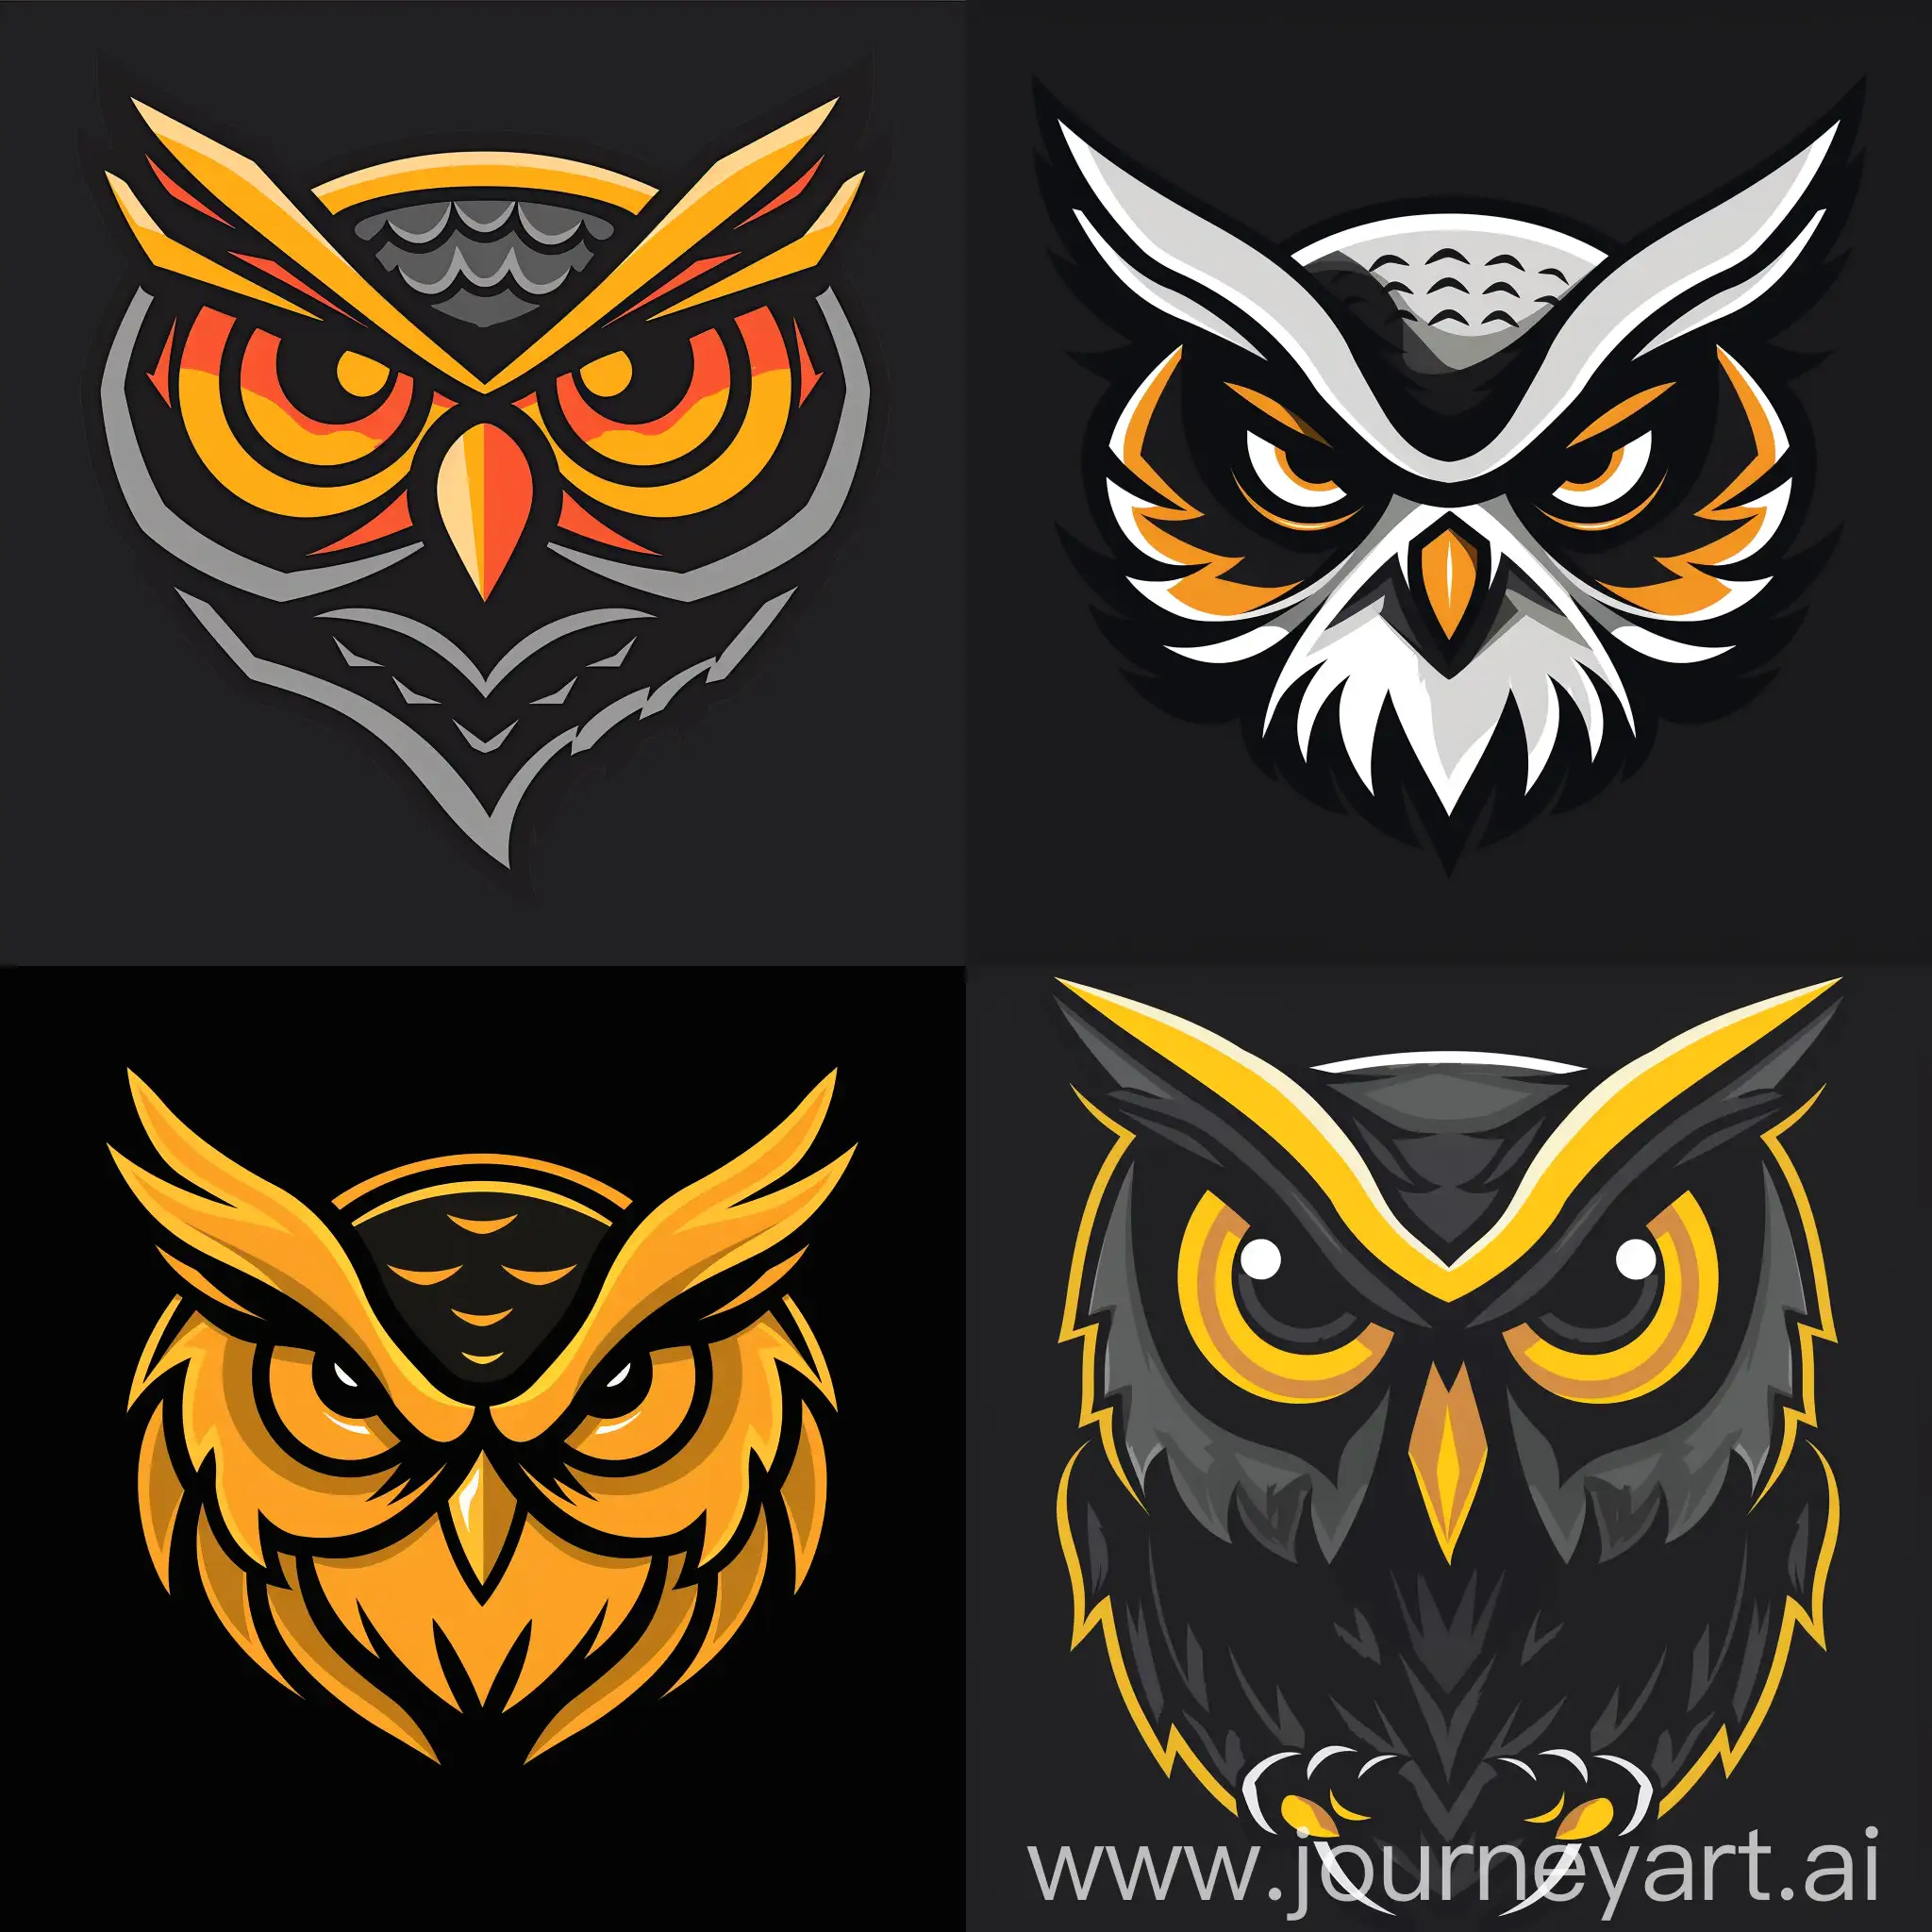 Owl-Logo-Design-for-YouTube-Channel